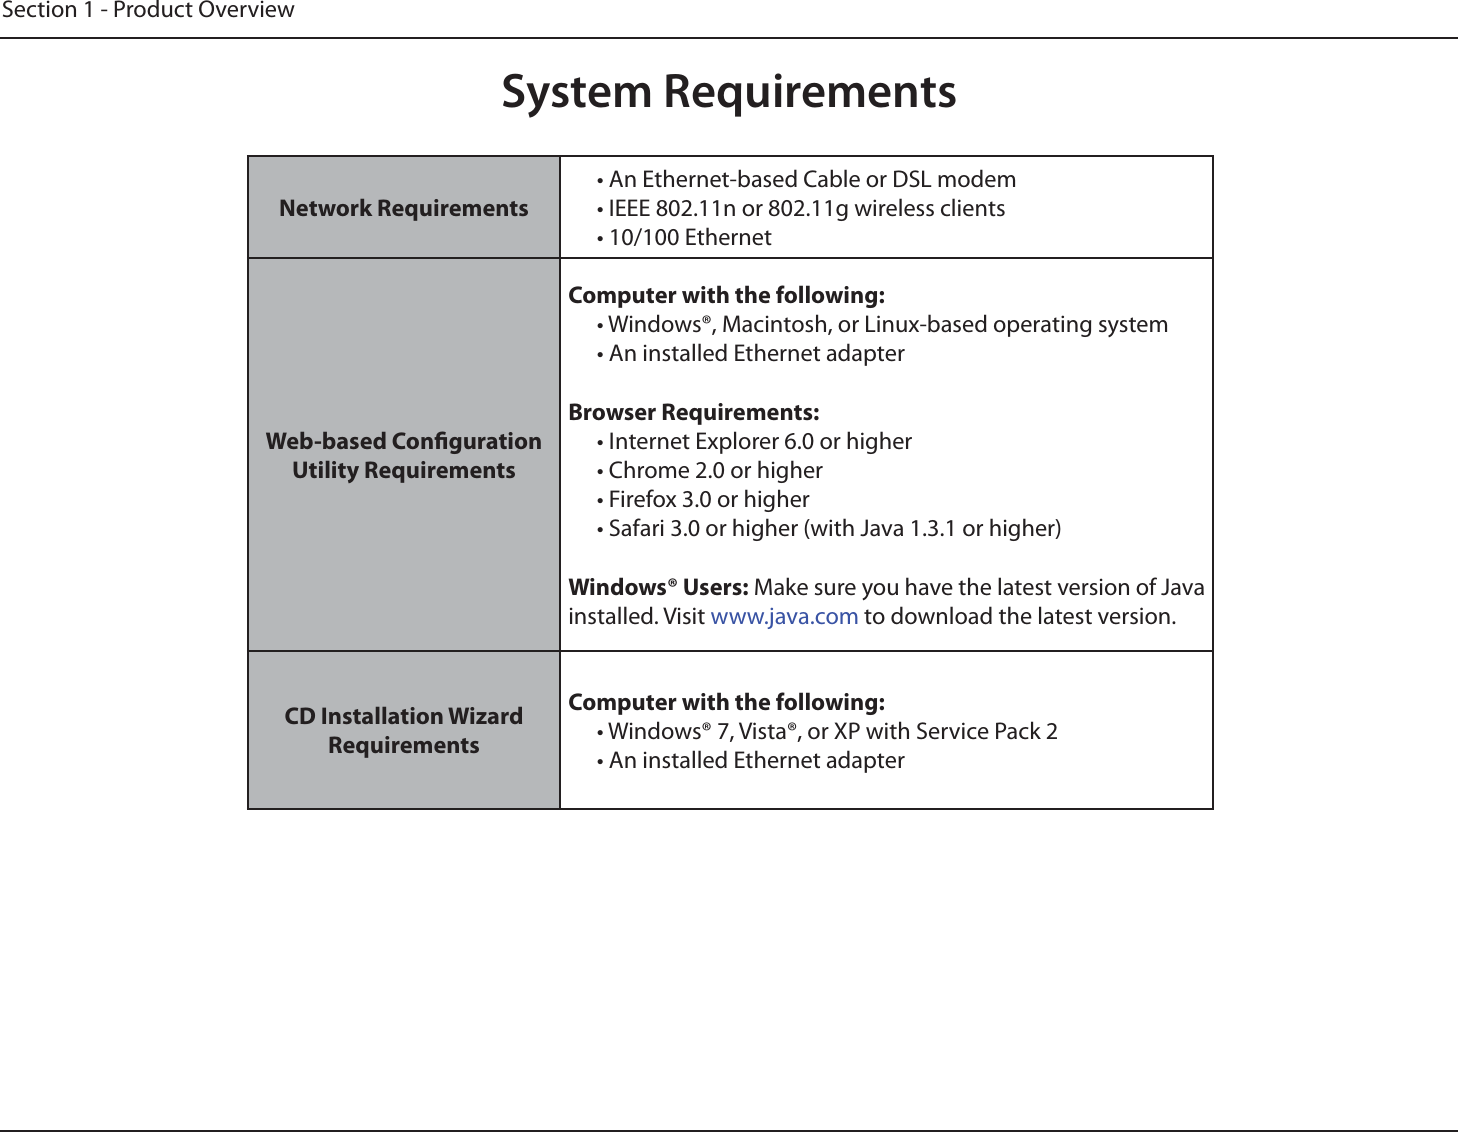 Section 1 - Product OverviewSystem RequirementsNetwork RequirementsXI&quot;OC@MI@O=&lt;N@? &lt;=G@JM!0)HJ?@HX&amp;&quot;&quot;&quot;IJMBRDM@G@NN&gt;GD@IONX&quot;OC@MI@OWeb-based Conguration Utility RequirementsComputer with the following:X4DI?JRN]*&lt;&gt;DIOJNCJM)DIPS=&lt;N@?JK@M&lt;ODIBNTNO@HXIDINO&lt;GG@?&quot;OC@MI@O&lt;?&lt;KO@MBrowser Requirements:X&amp;IO@MI@O&quot;SKGJM@MJMCDBC@MX CMJH@JMCDBC@MX#DM@AJSJMCDBC@MX0&lt;A&lt;MDJMCDBC@MRDOC&apos;&lt;Q&lt;JMCDBC@MWindows® Users:*&lt;F@NPM@TJPC&lt;Q@OC@G&lt;O@NOQ@MNDJIJA&apos;&lt;Q&lt;DINO&lt;GG@?3DNDORRRE&lt;Q&lt;&gt;JHOJ?JRIGJ&lt;?OC@G&lt;O@NOQ@MNDJICD Installation Wizard RequirementsComputer with the following:X4DI?JRN]3DNO&lt;]JM5-RDOC0@MQD&gt;@-&lt;&gt;FXIDINO&lt;GG@?&quot;OC@MI@O&lt;?&lt;KO@M